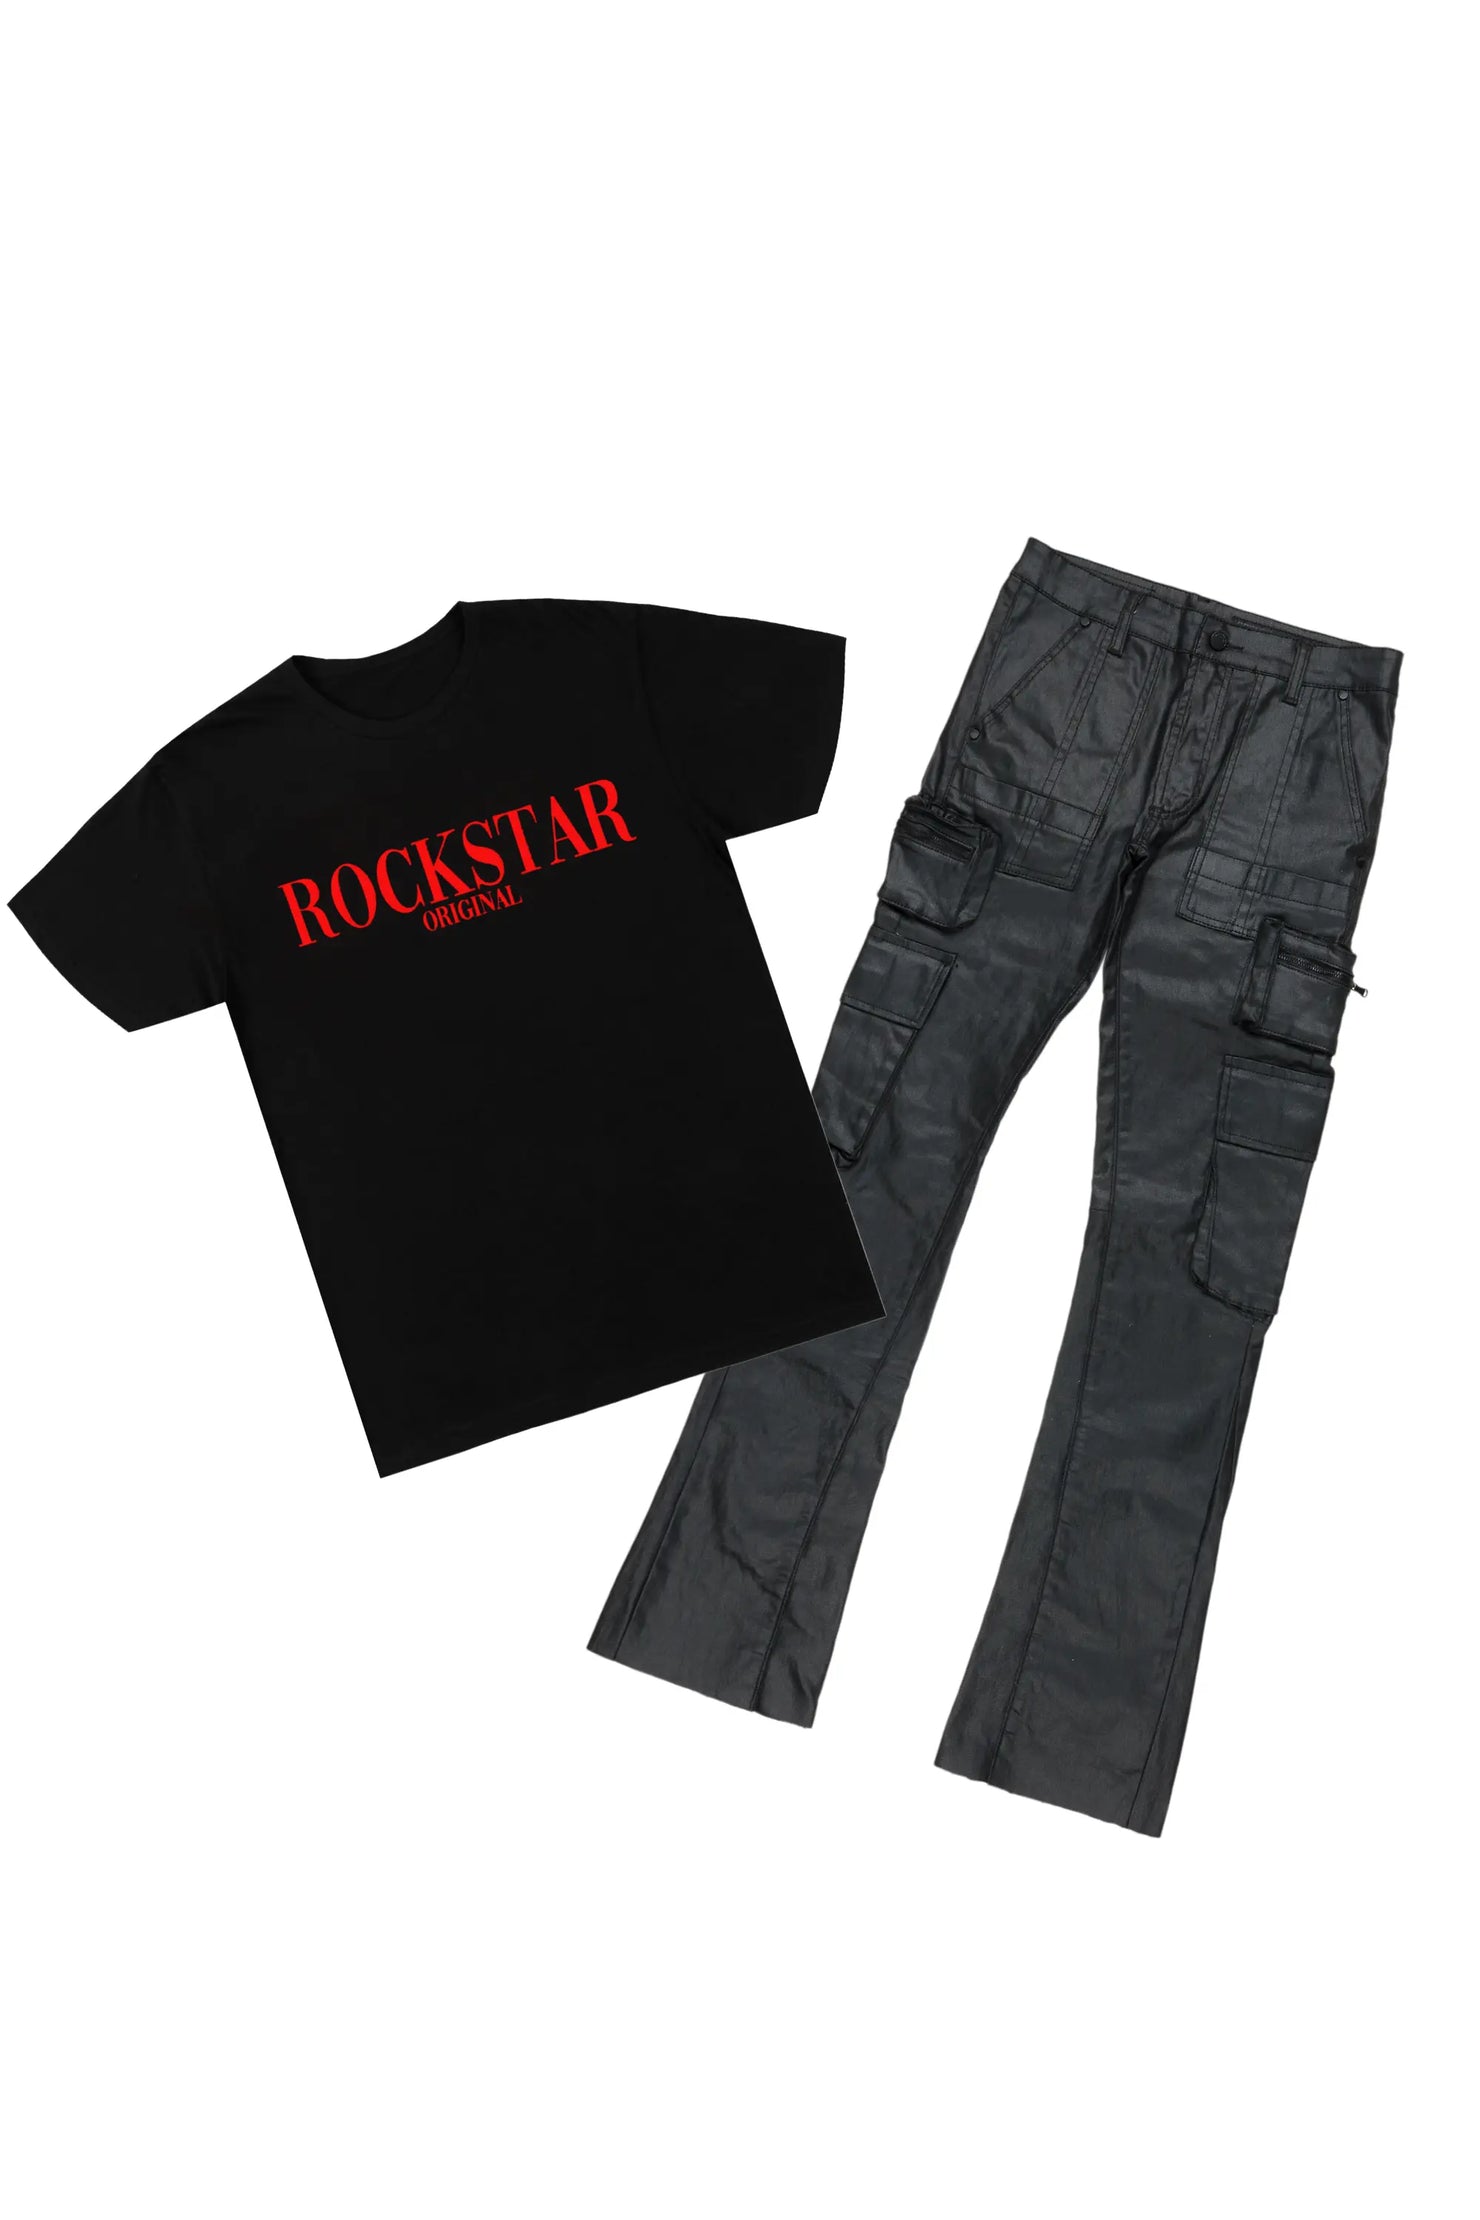 Octavio Black T-Shirt & Ritz Stacked Flare Jean Bundle